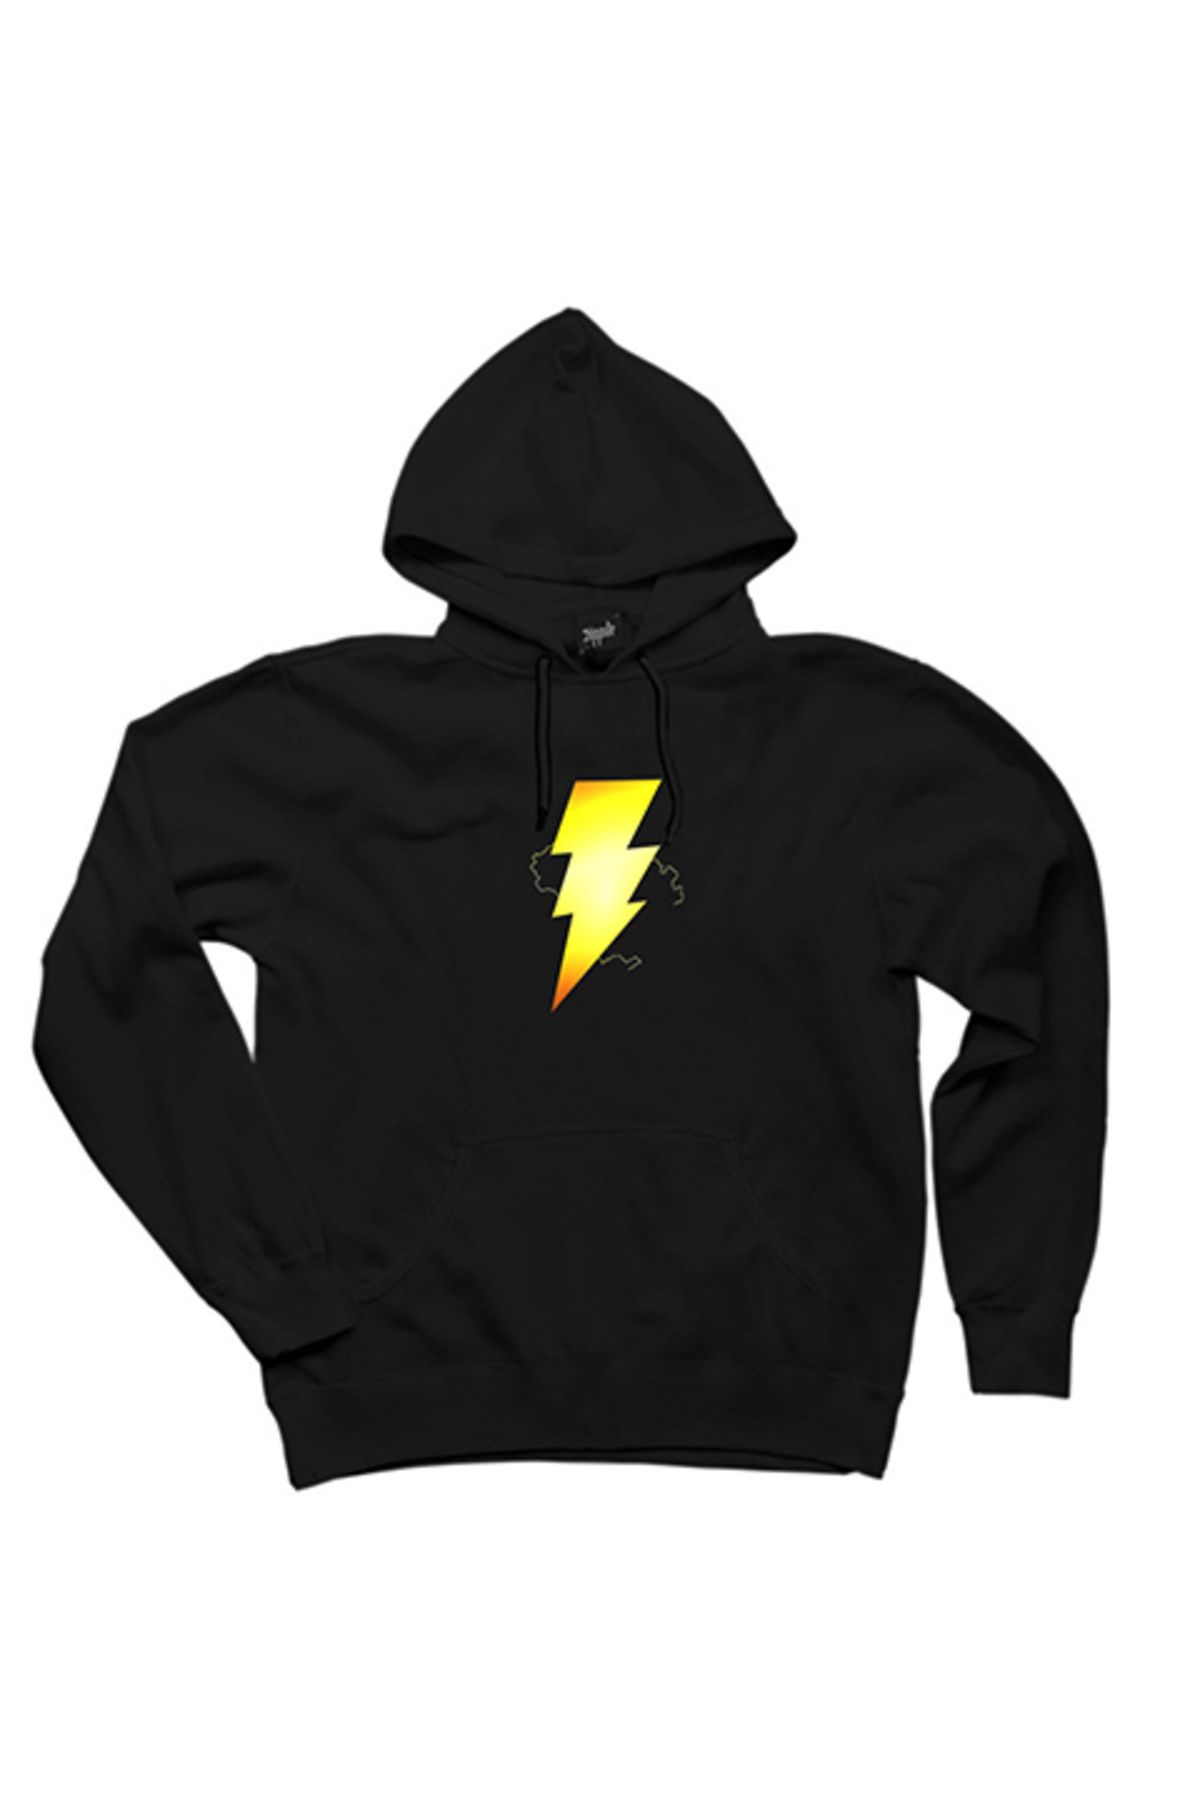 Tomris Hatun Shazam Logo Siyah Kapşonlu Sweatshirt Hoodie